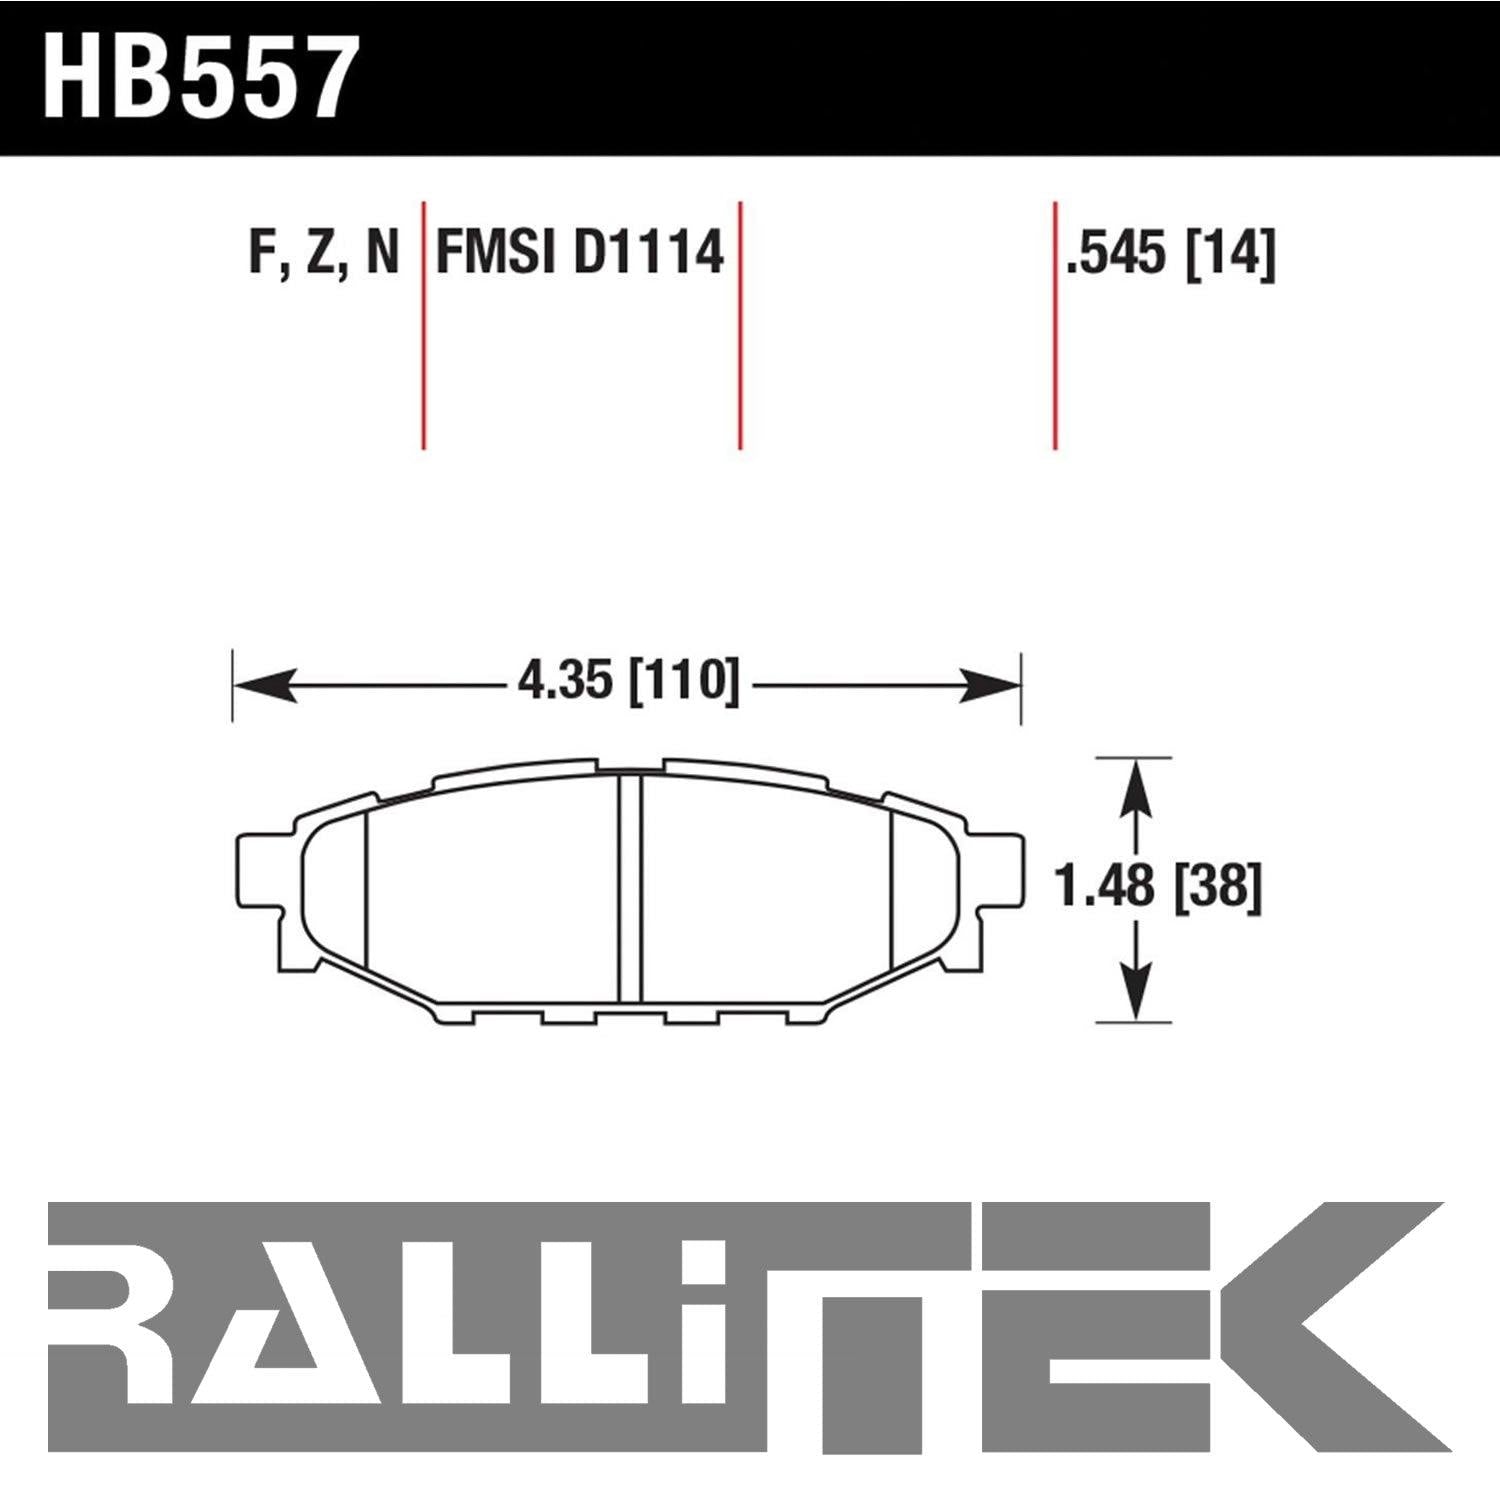 Hawk HPS 5.0 Rear Brake Pads - WRX 2008-2015 / Forester 2009-2013 / More